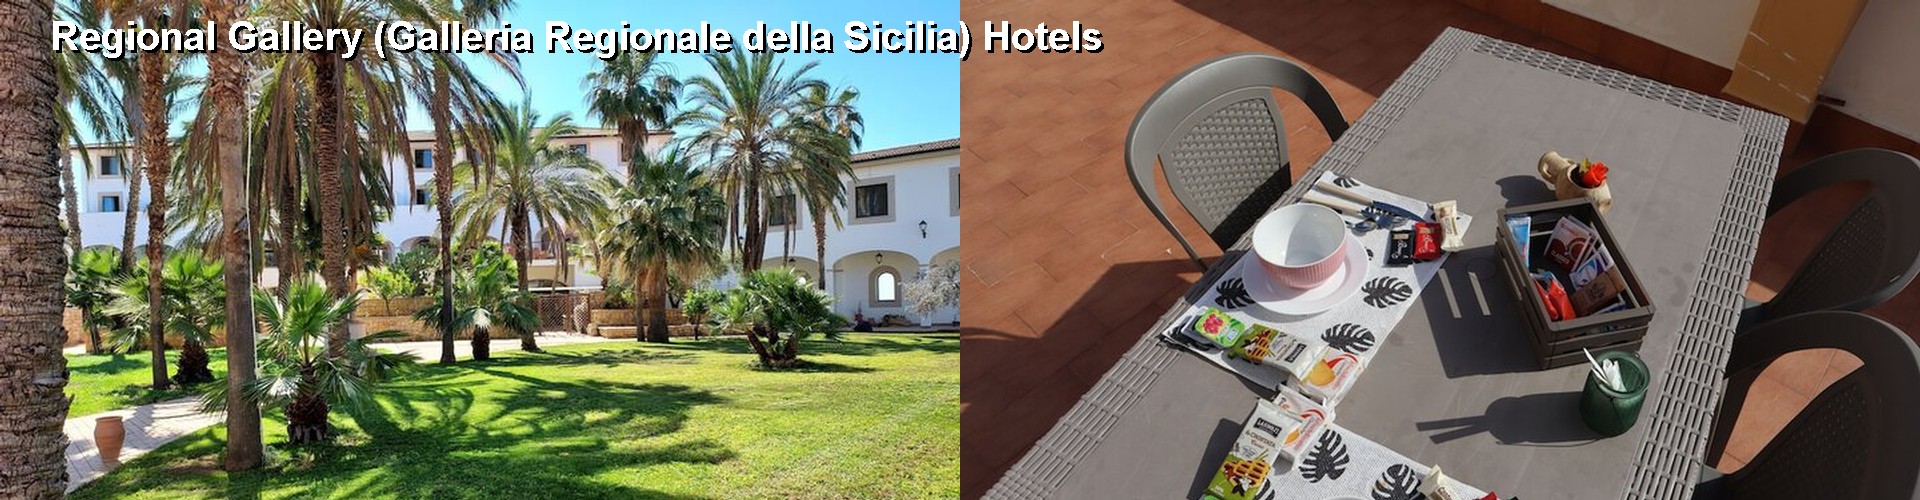 5 Best Hotels near Regional Gallery (Galleria Regionale della Sicilia)